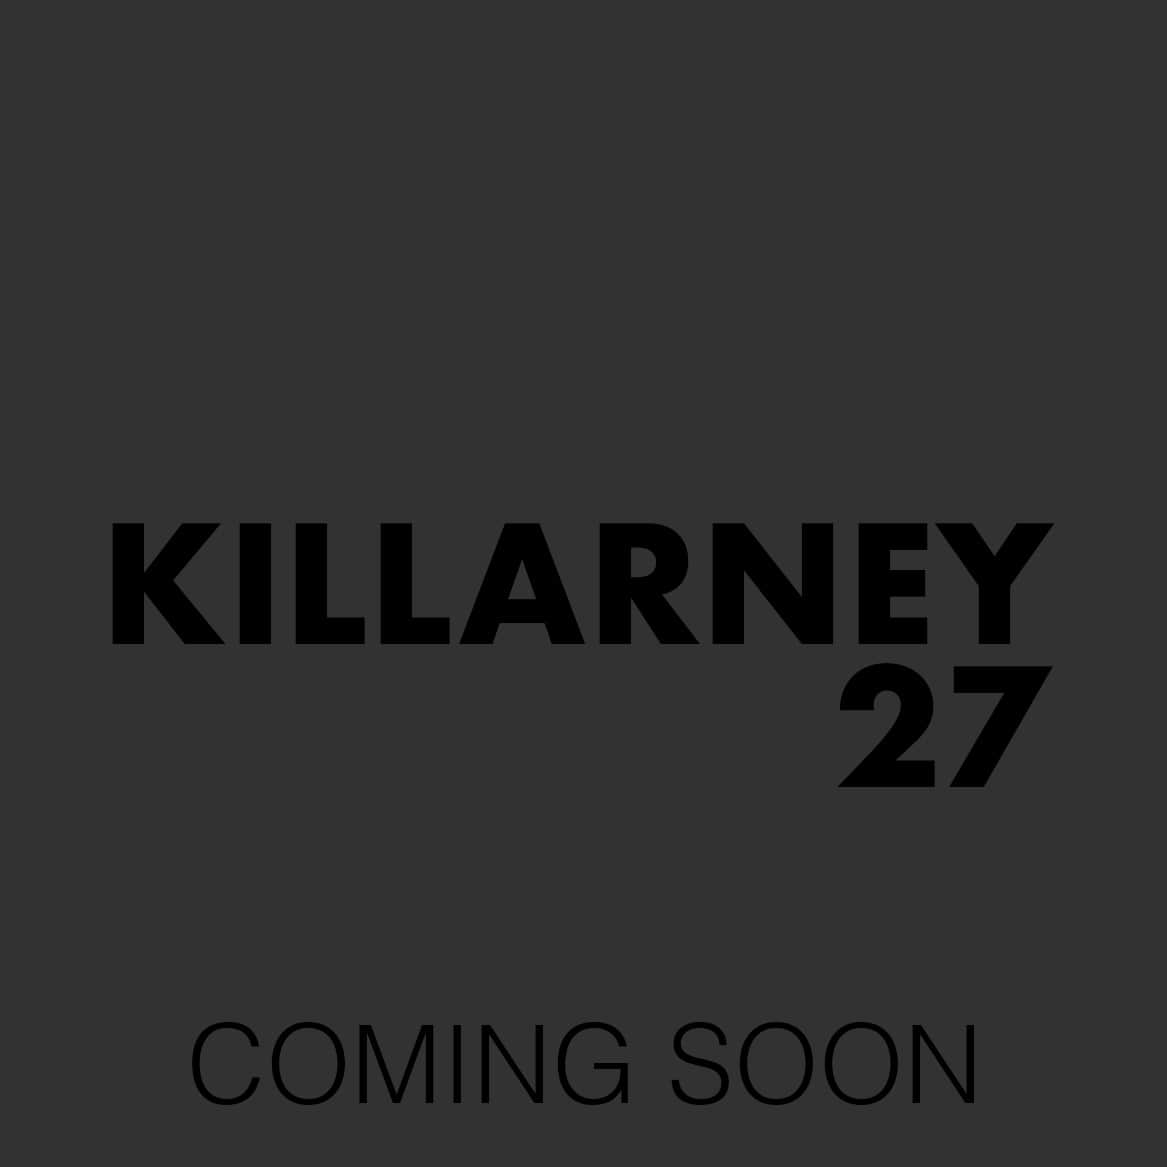 Killarney 27 - Content Cover_Coming Soon-min.jpg